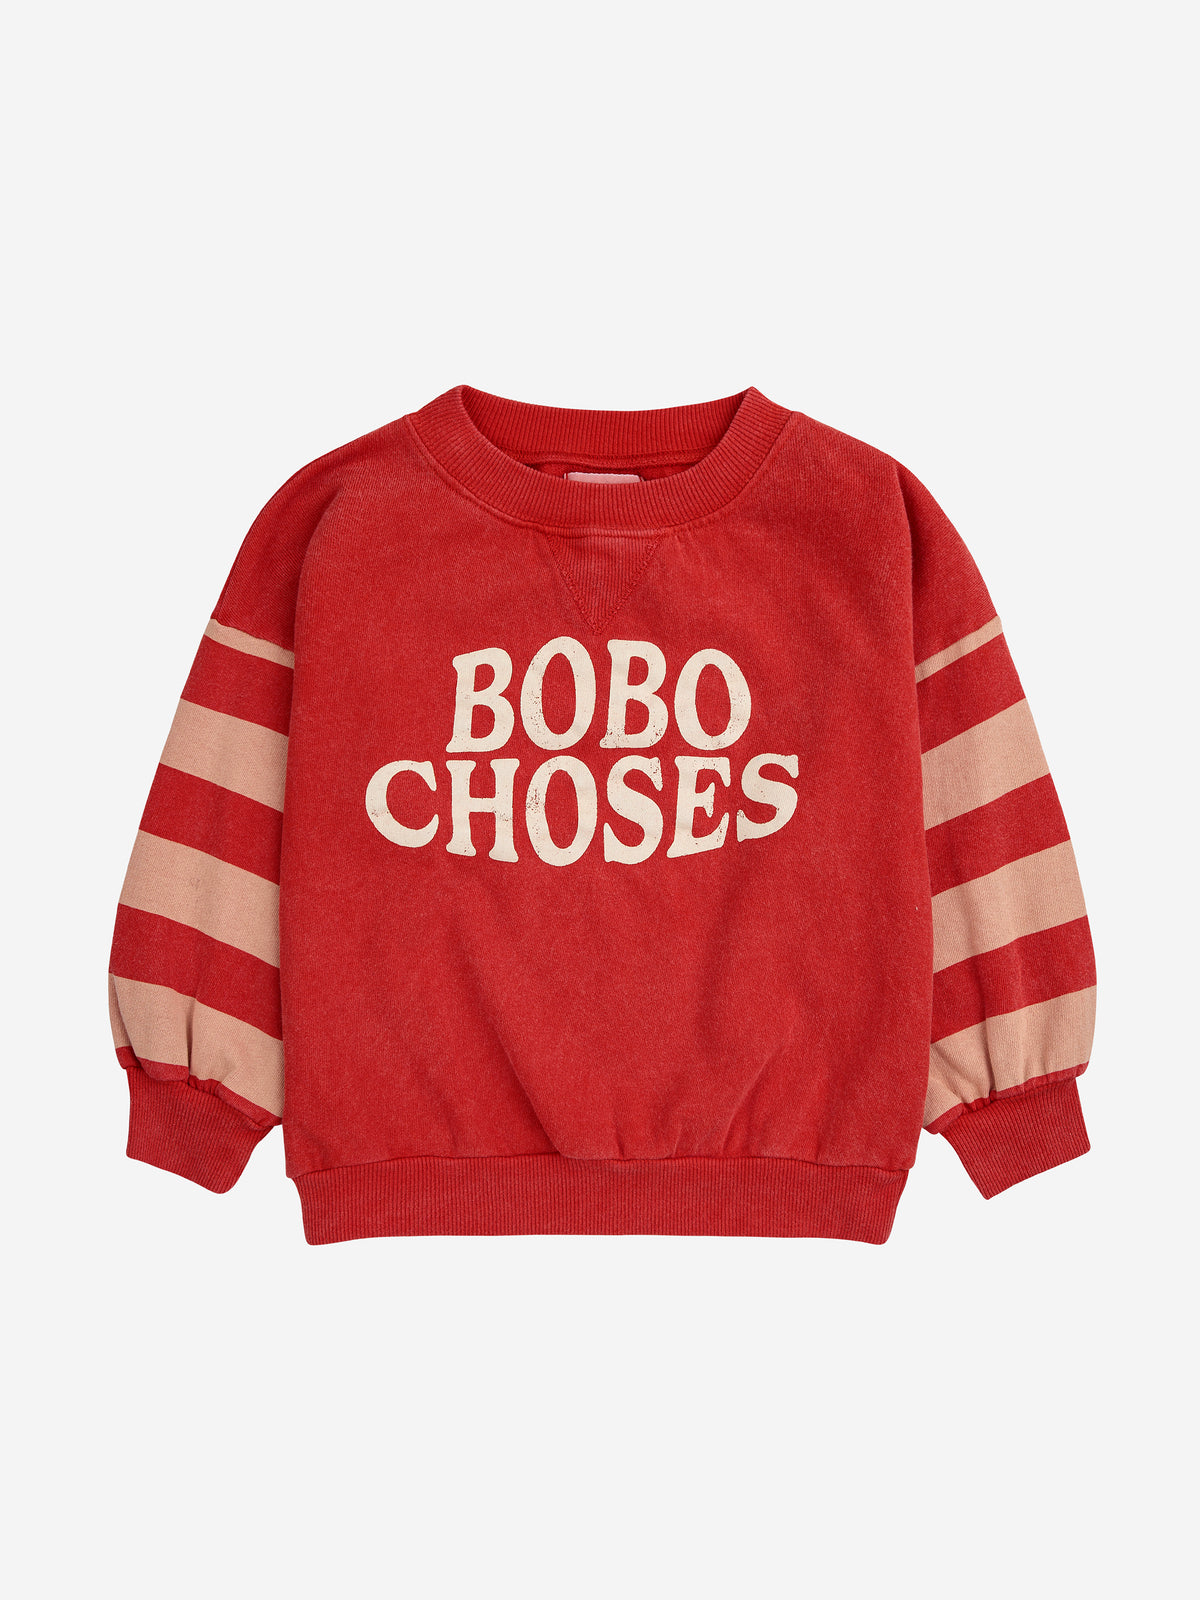 Bobo choses stripes sweatshirt, Bobo Choses